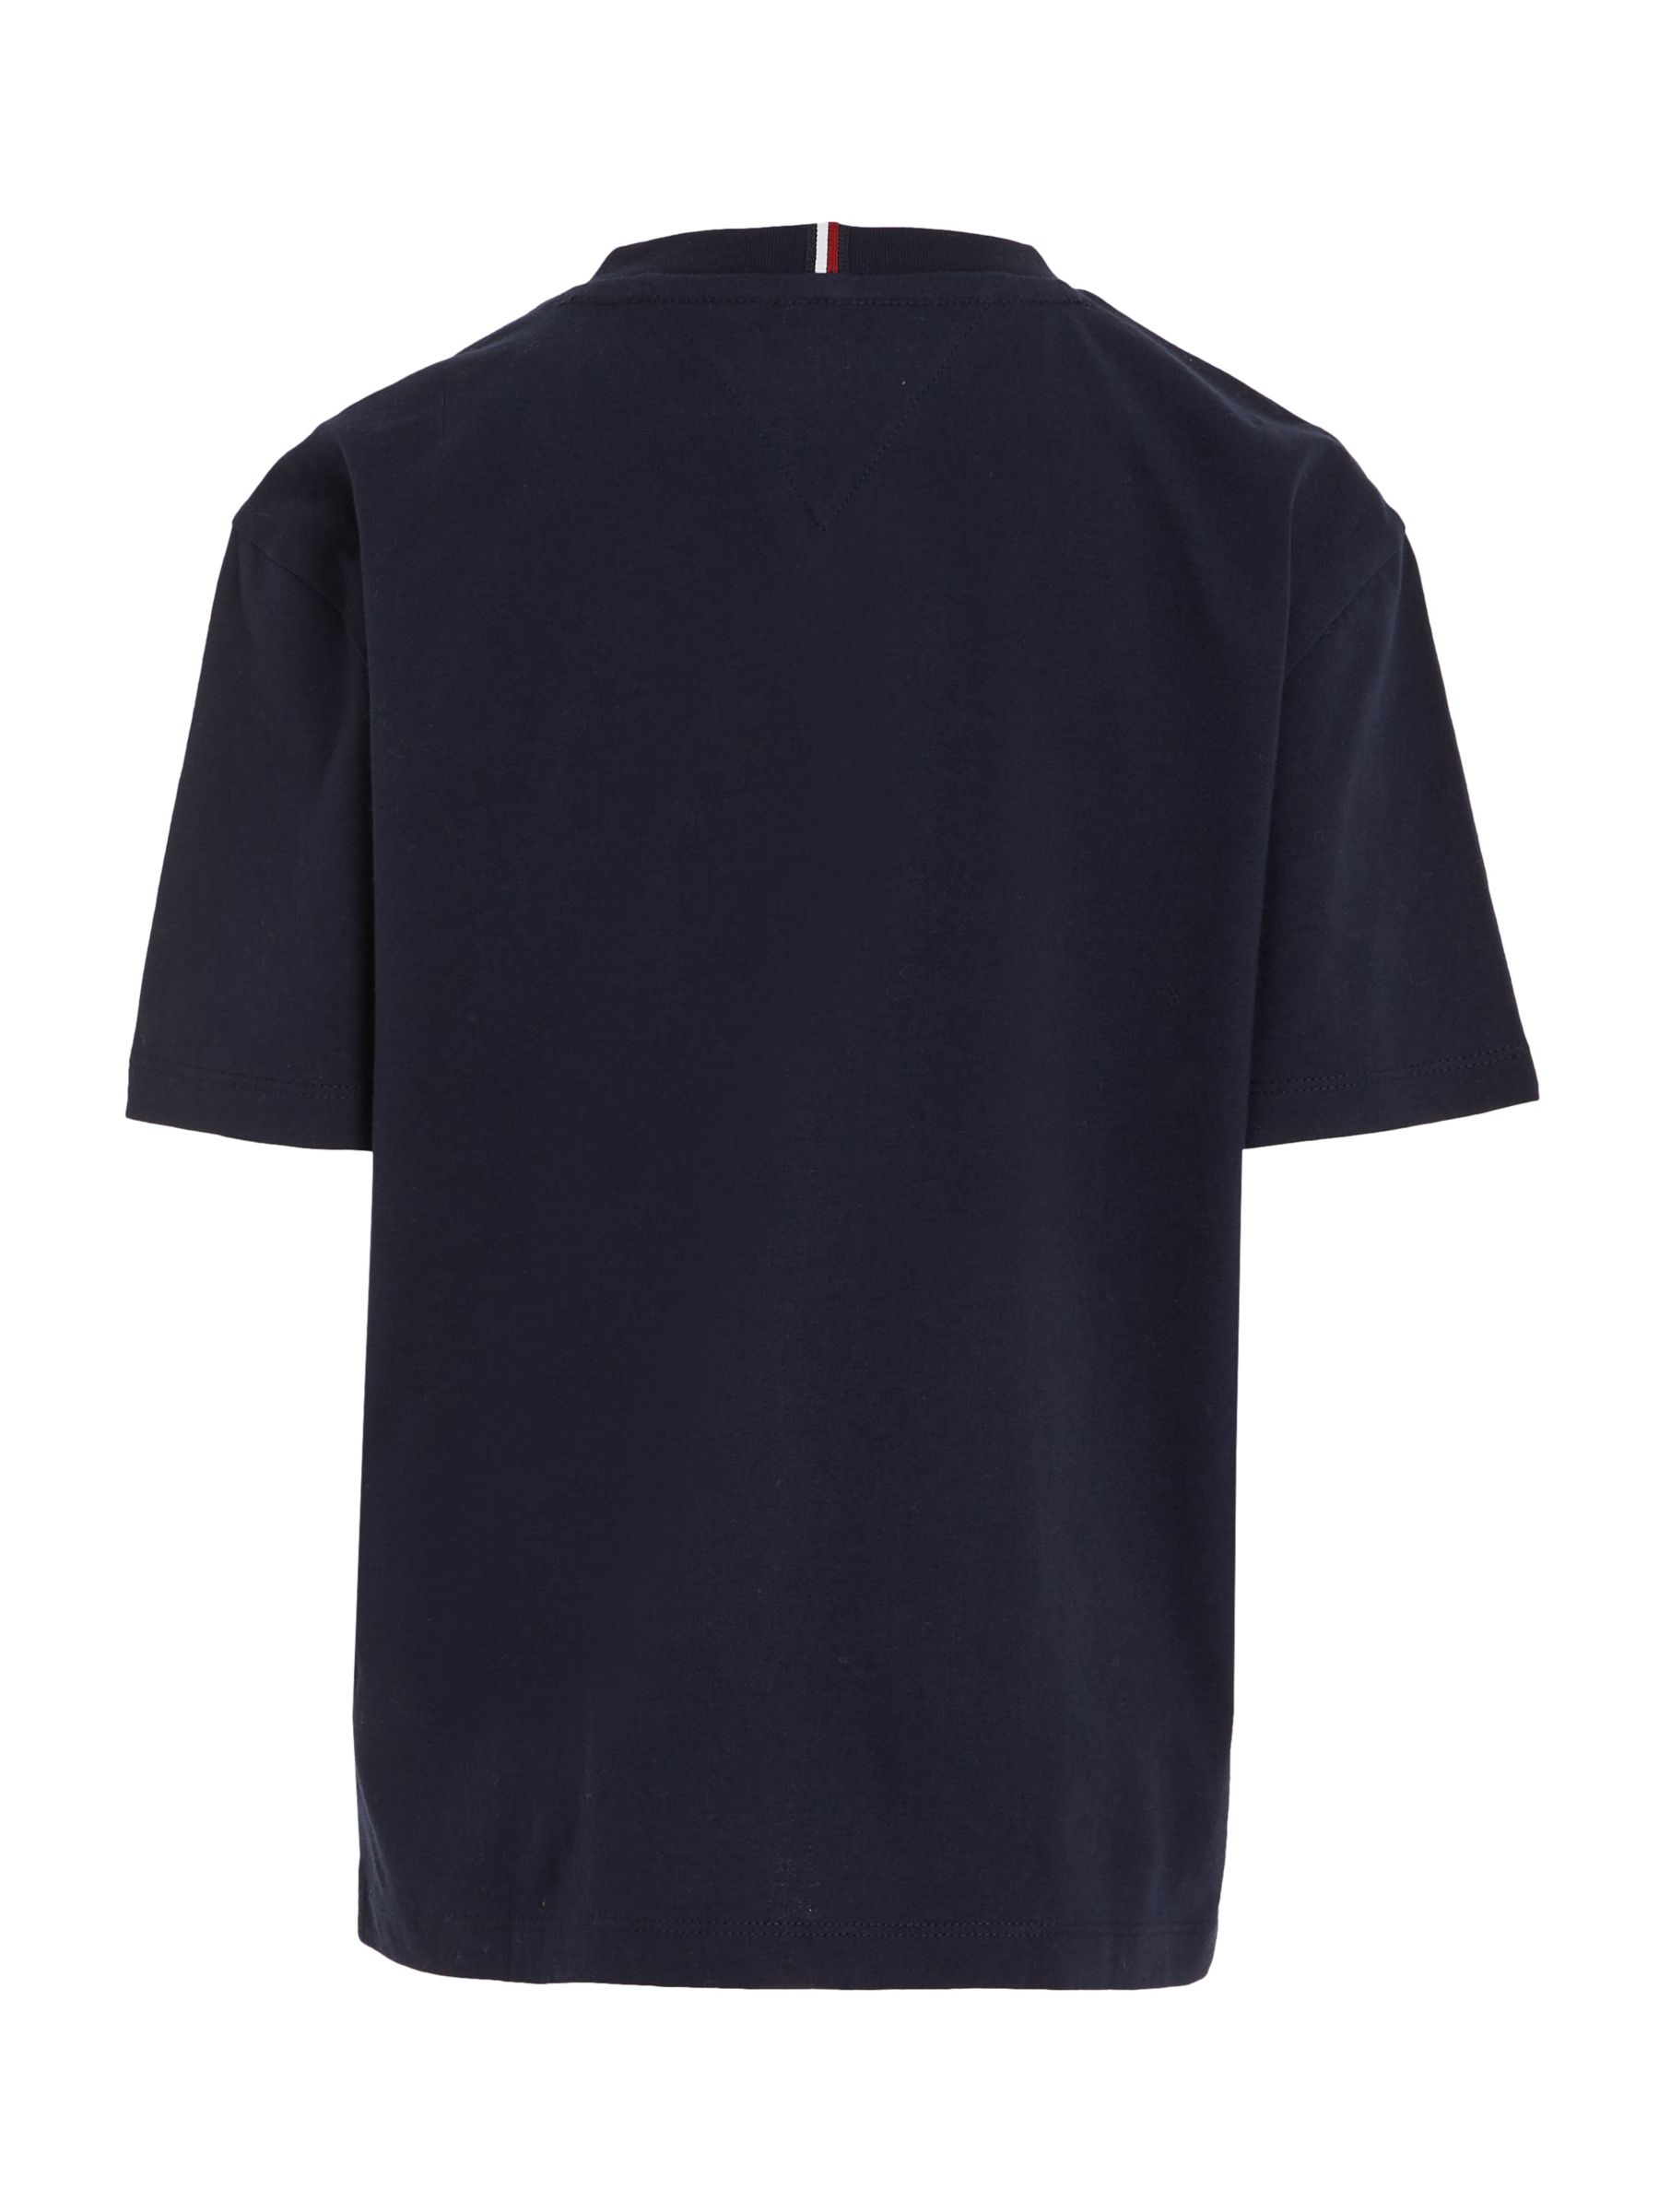 Tommy Hilfiger Kids' Essential Logo Short Sleeve T-Shirt, Desert Sky, 3 years